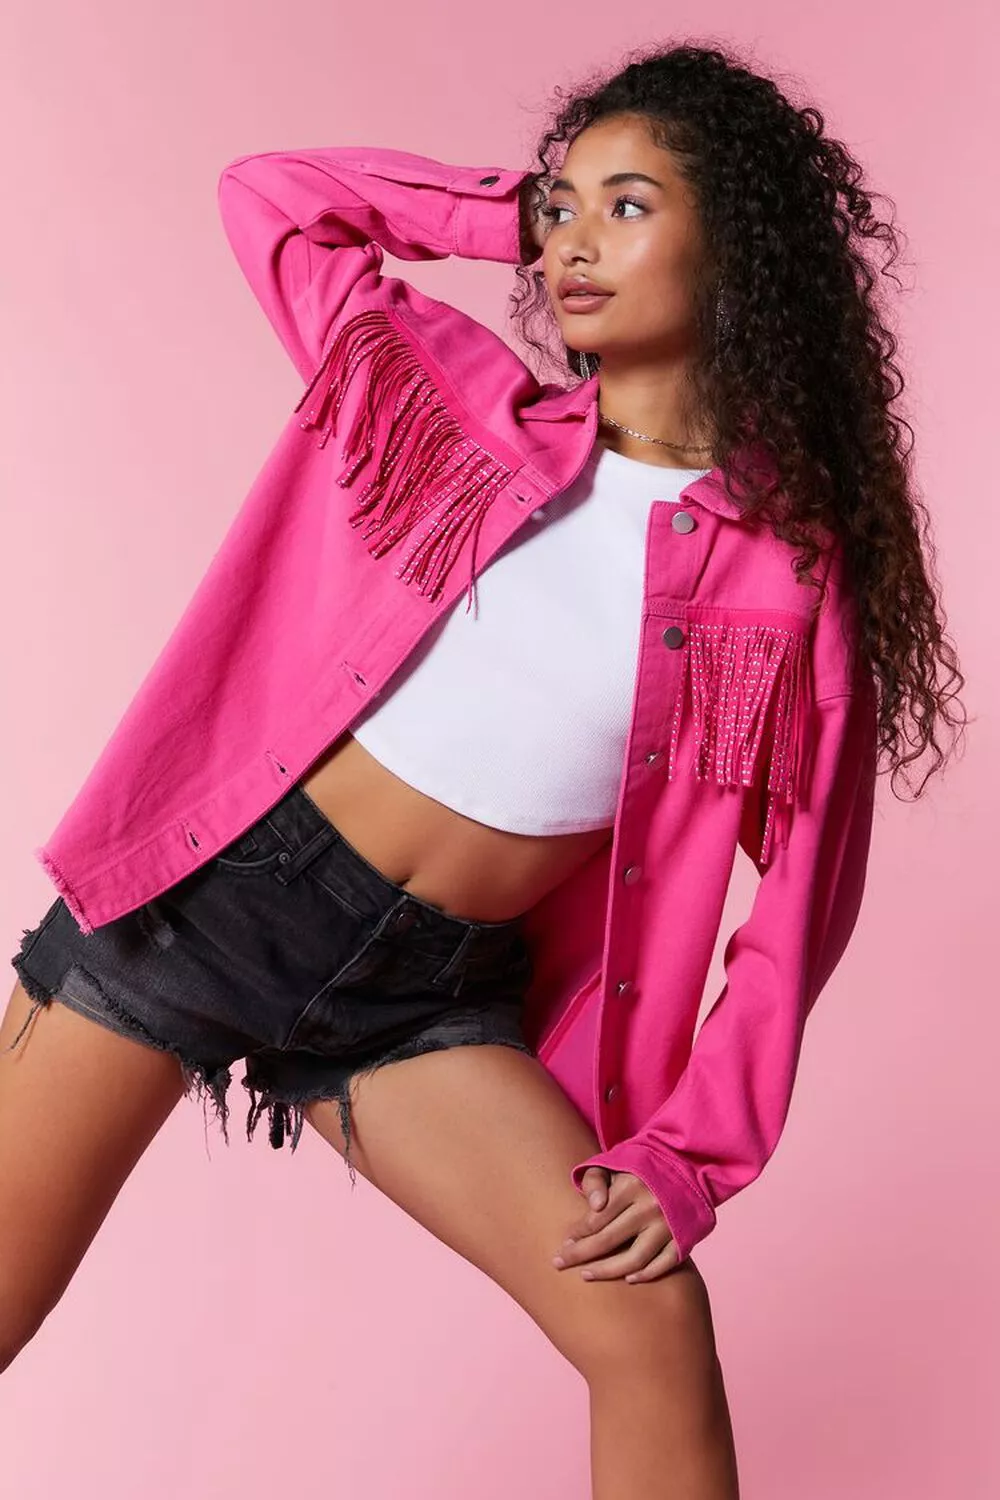 Shop PS Boutique Hot Pink Denim Jacket with Rhinestone Fringe